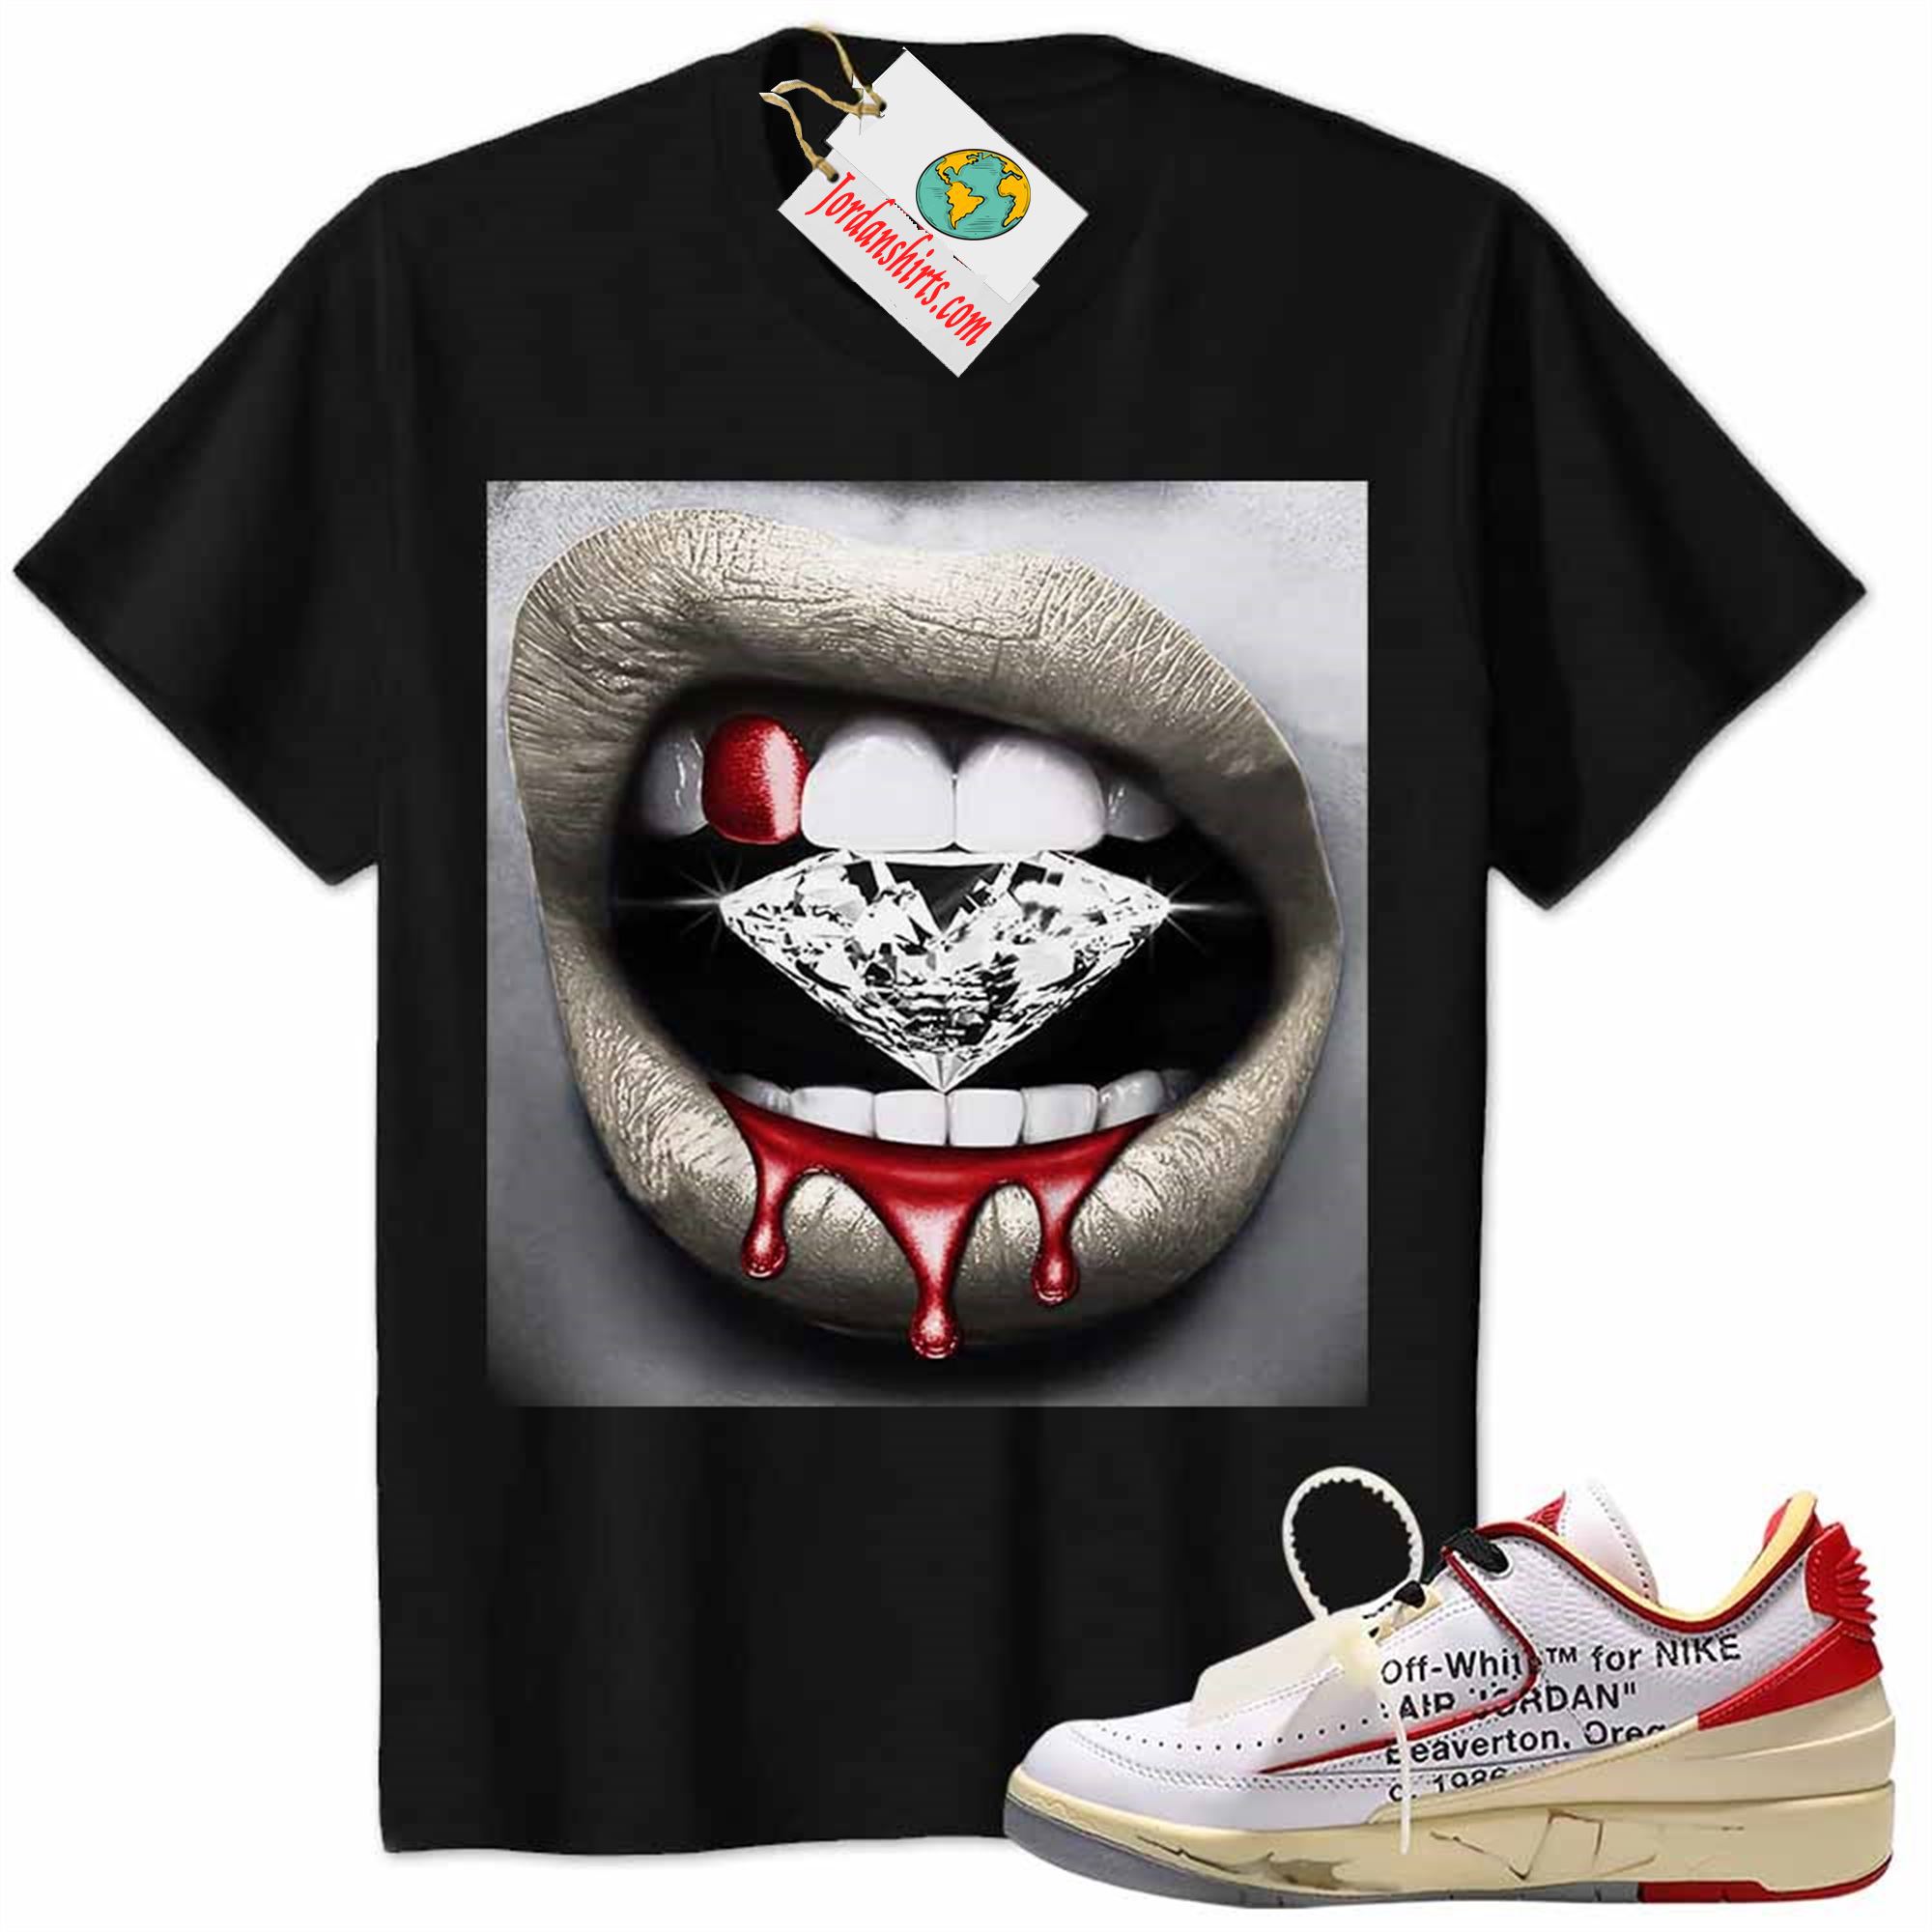 Jordan 2 Shirt, Jordan 2 Low White Red Off-white Shirt Sexy Lip Bite Diamond Dripping Black Size Up To 5xl